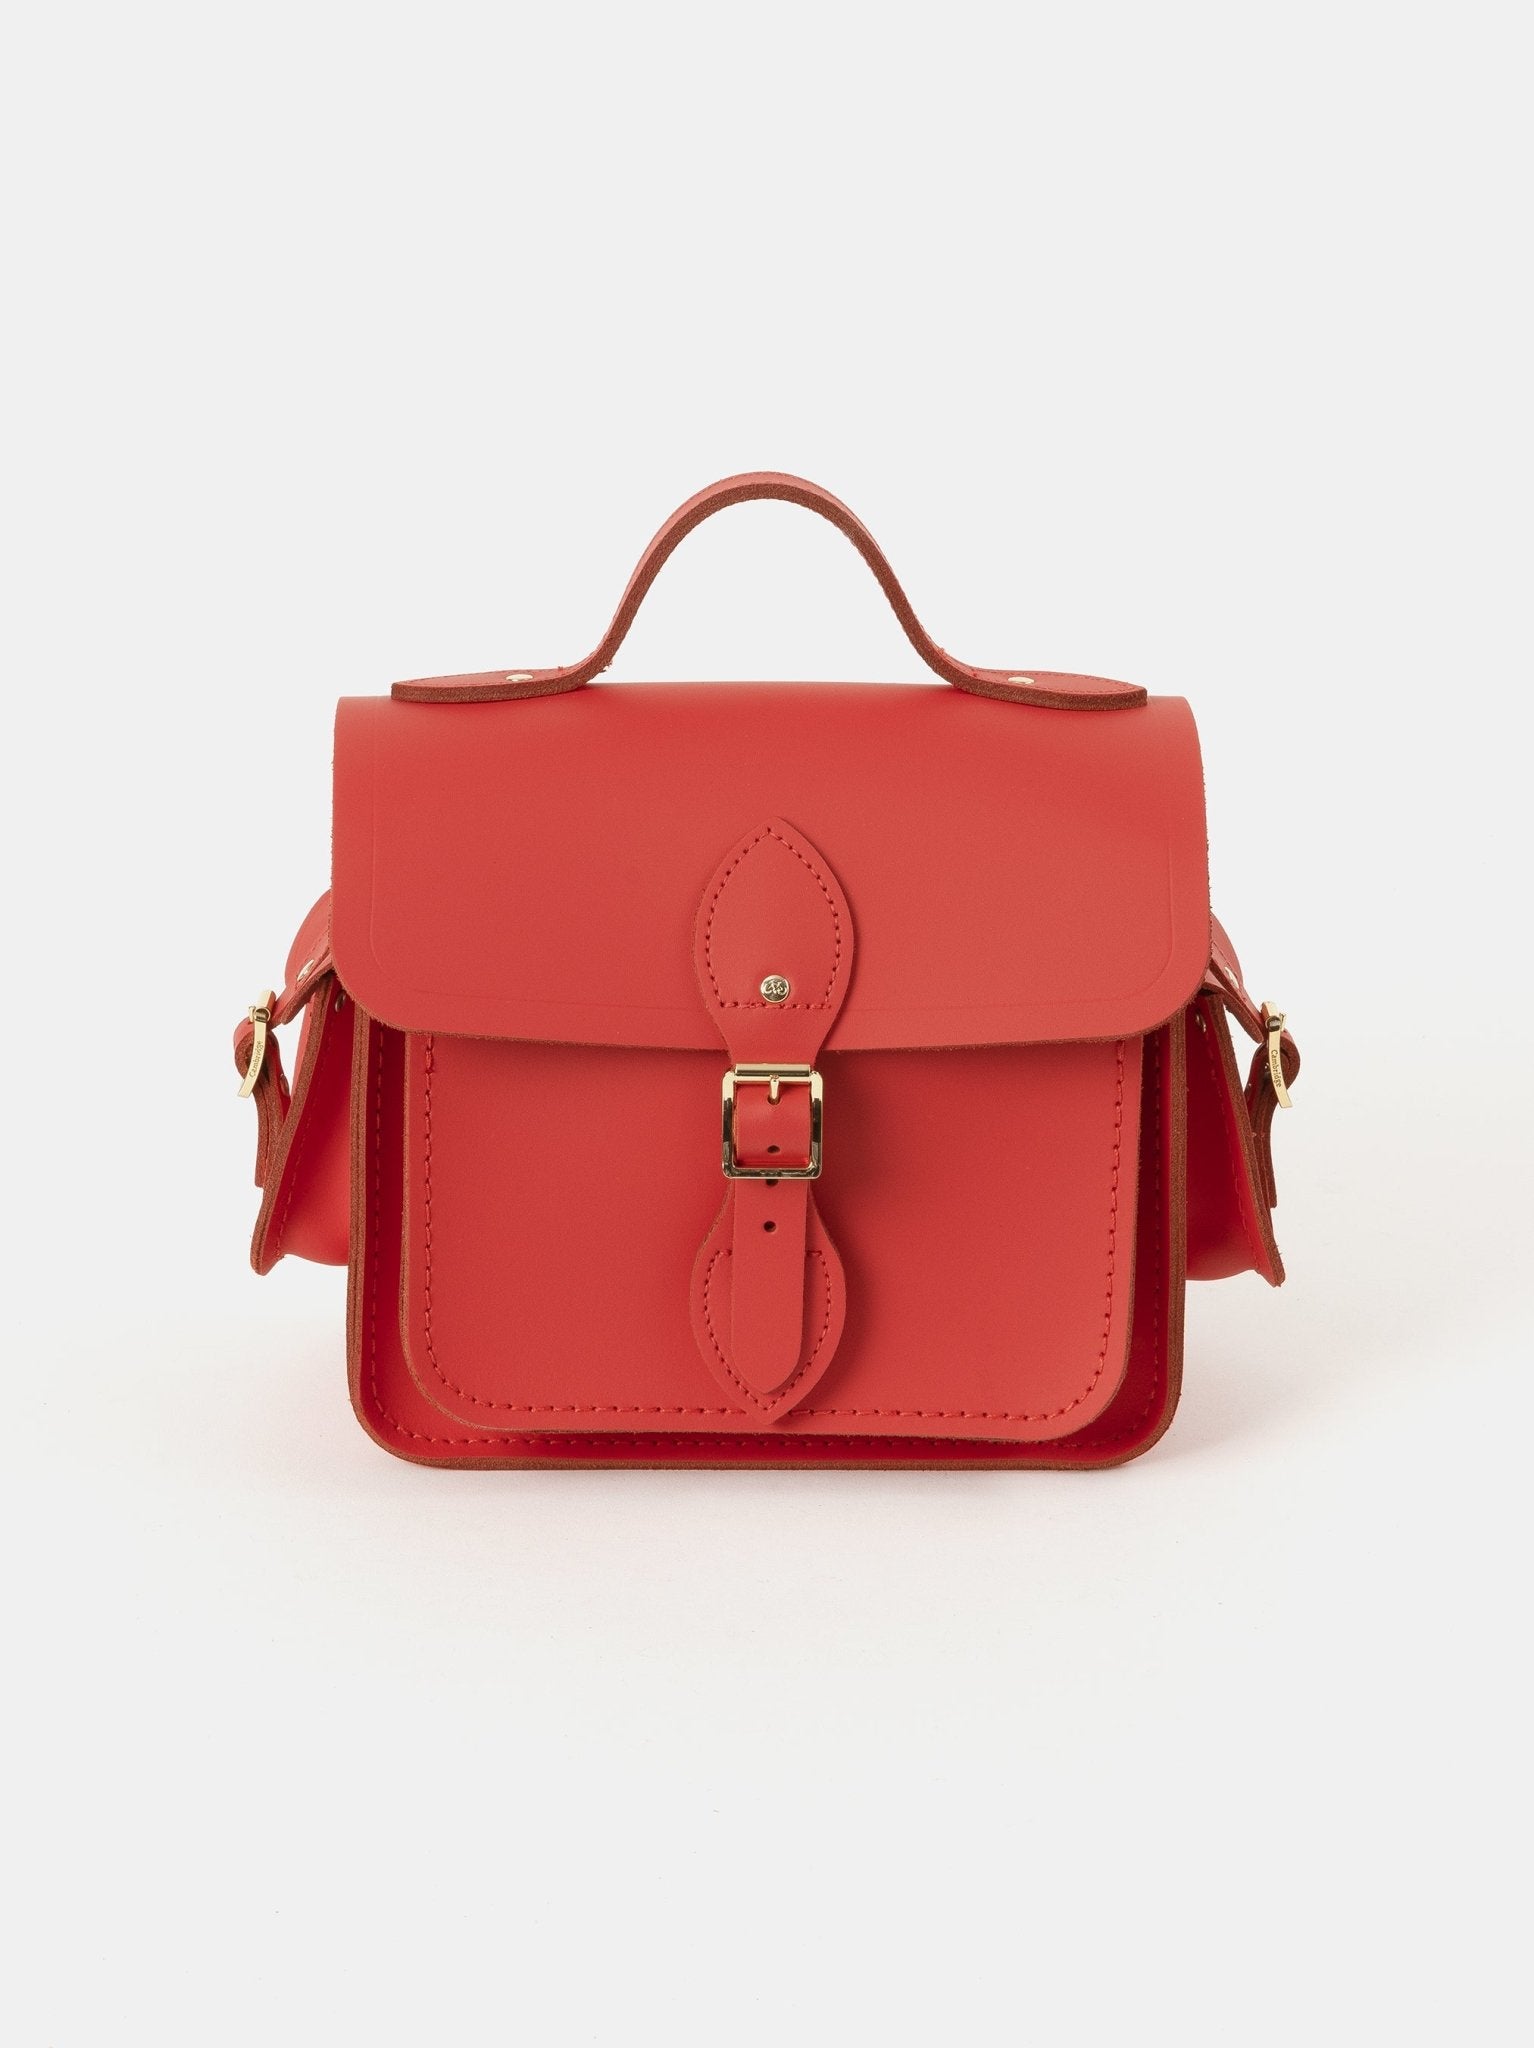 The Cambridge Satchel Co. Unisex Red Bag